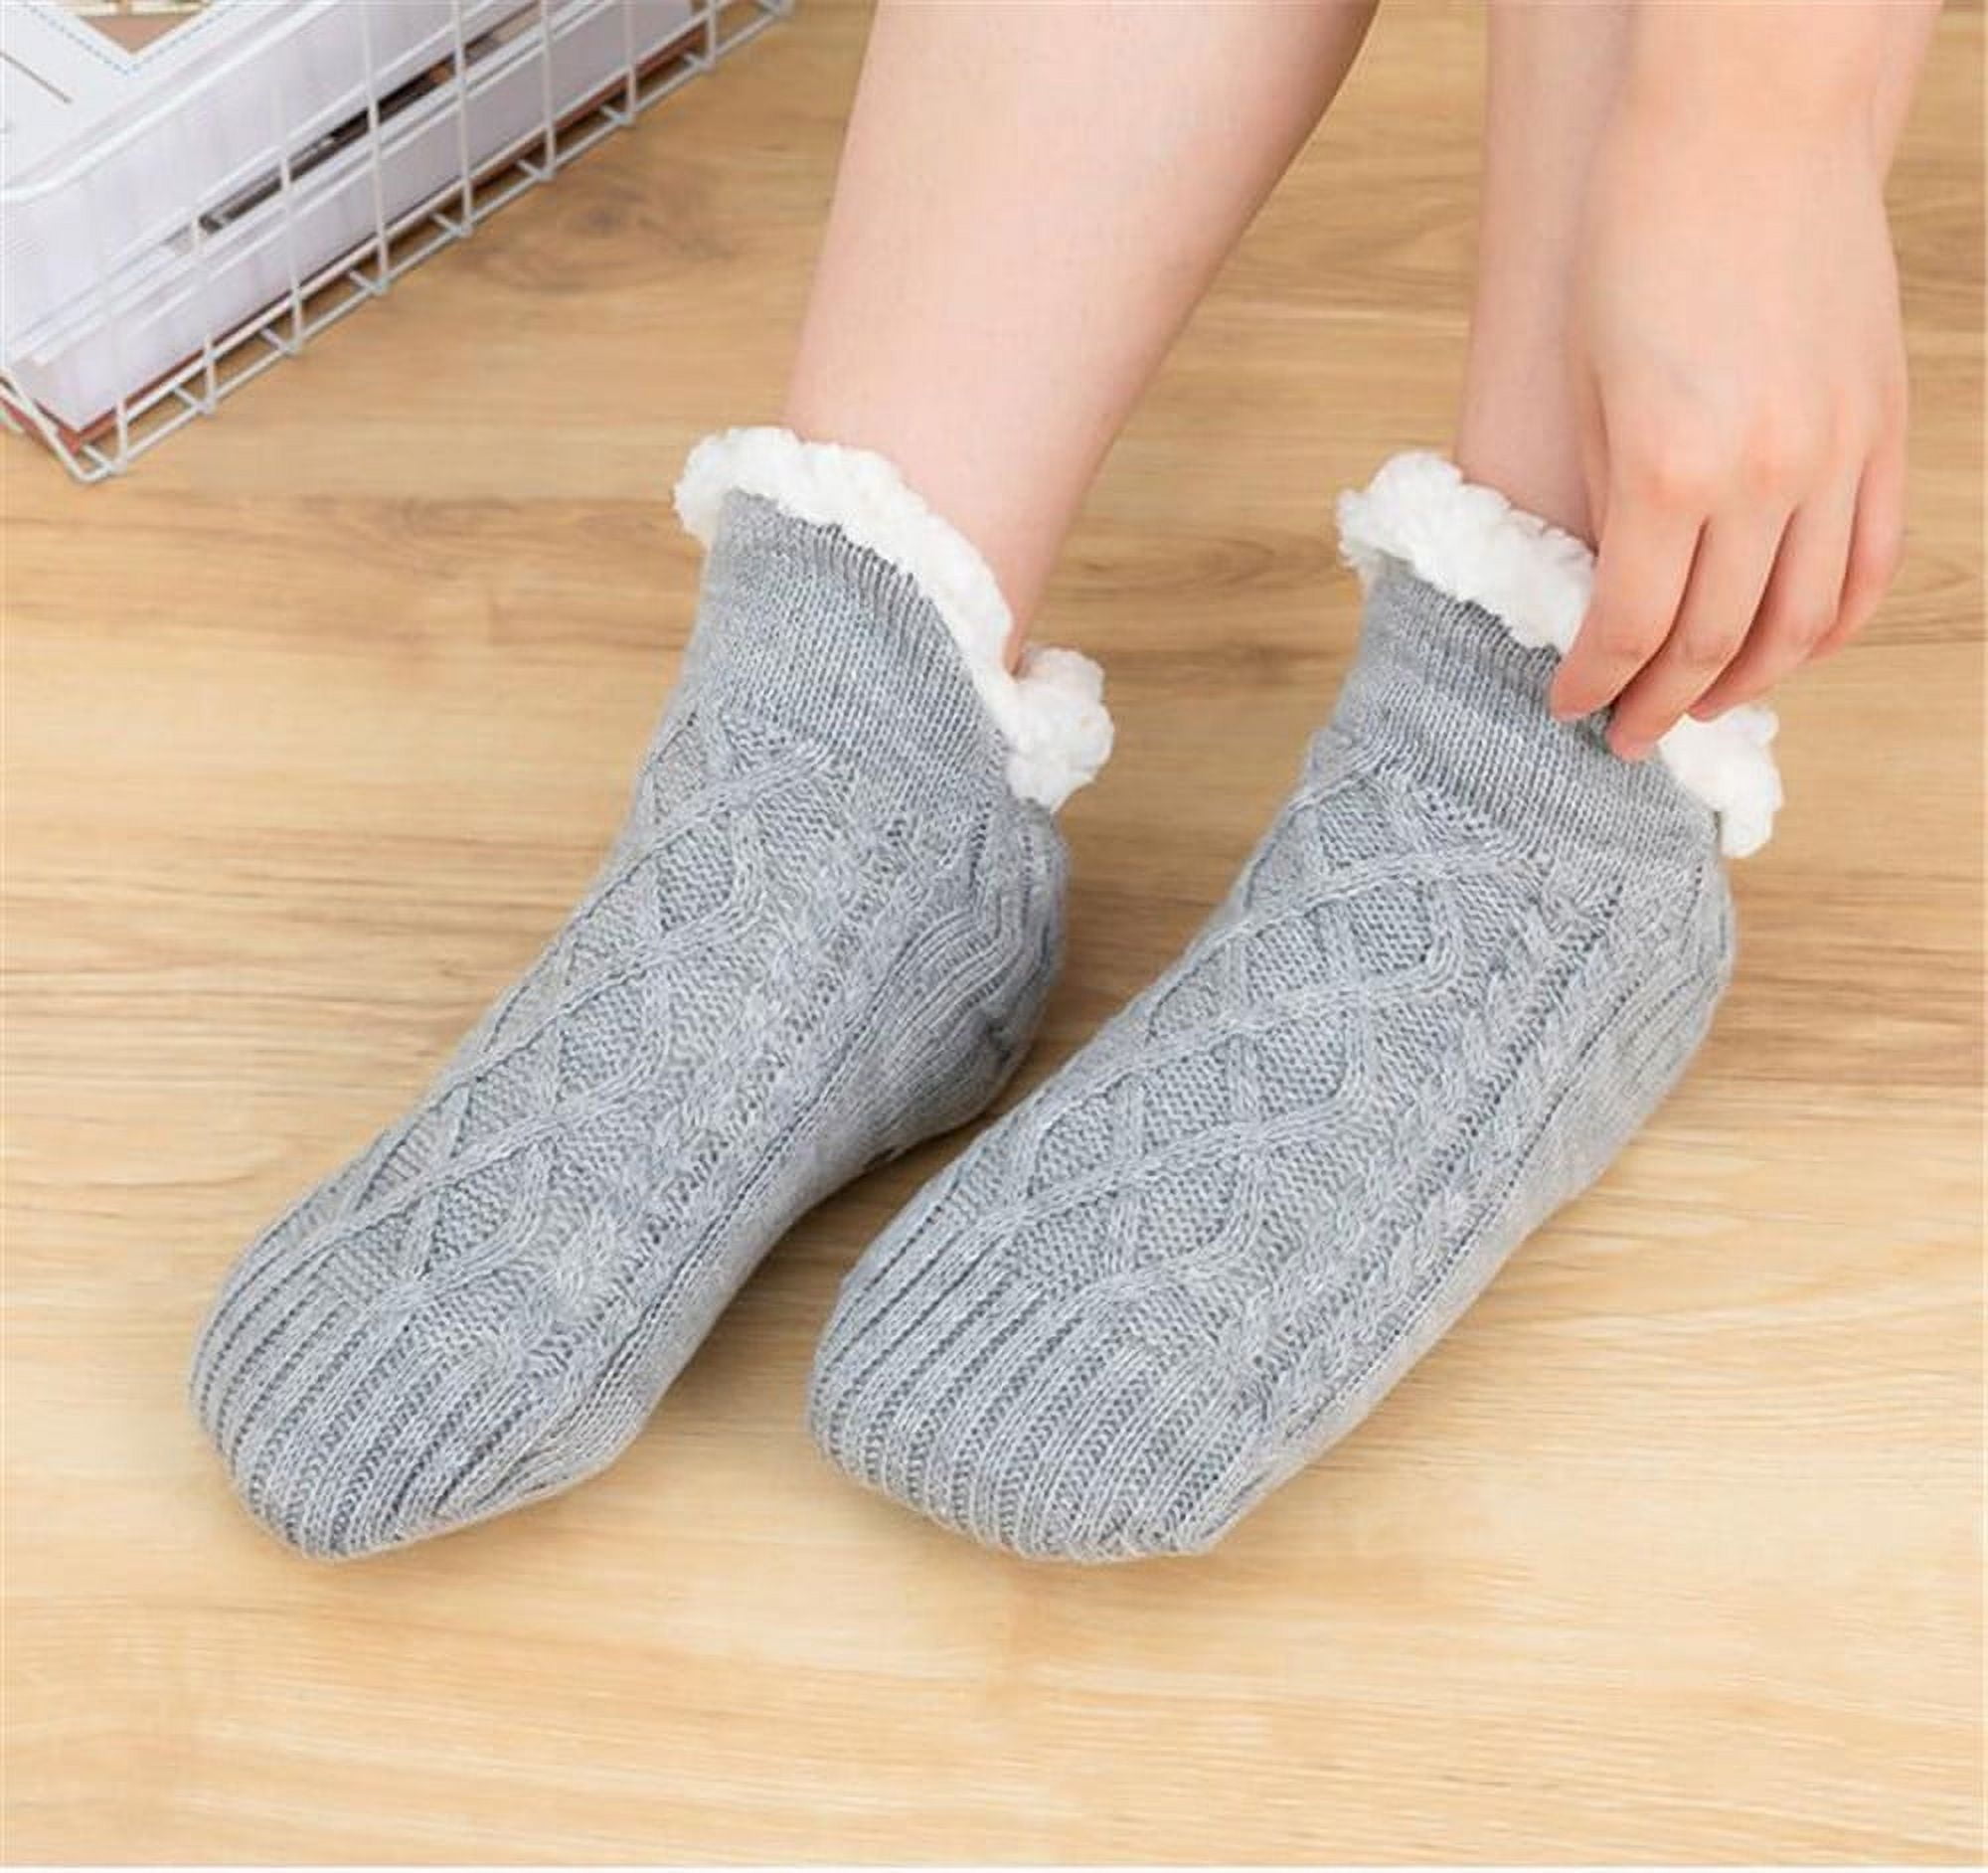 Thermal Socks Mens Women Winter Warm Home Soft Cotton Sleeping